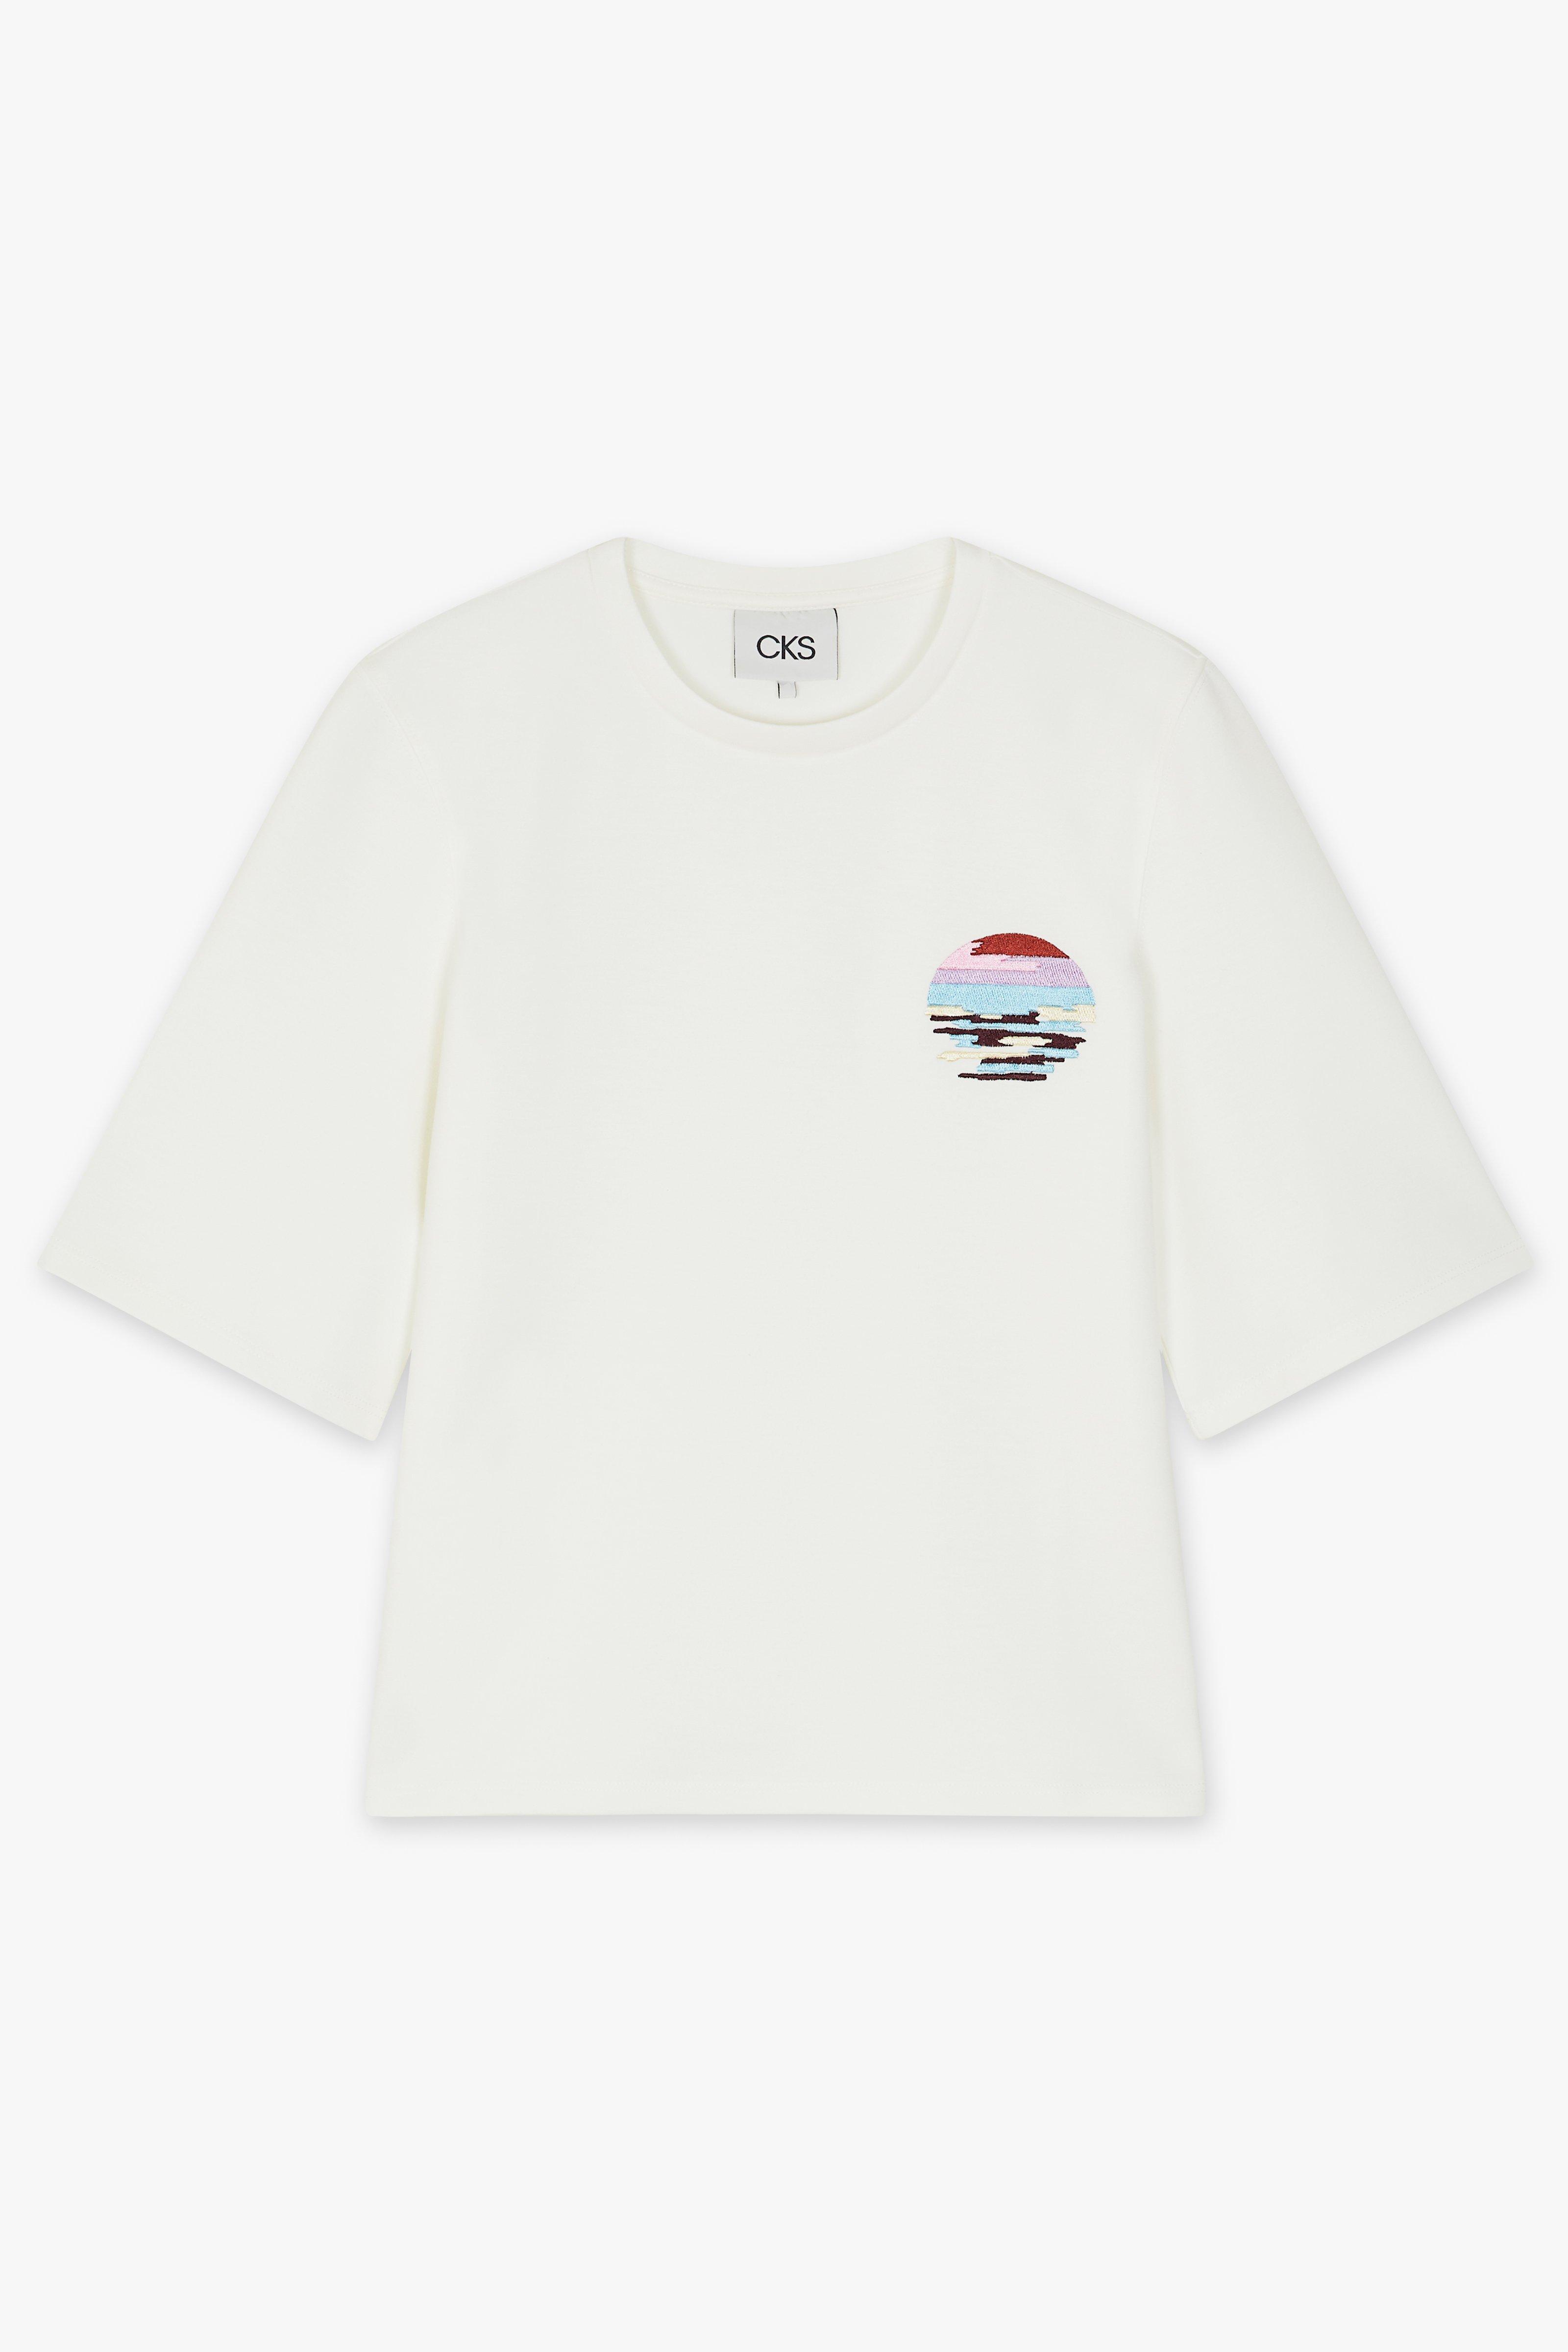 CKS Dames - SARI - T-Shirt Kurzarm - Weiß